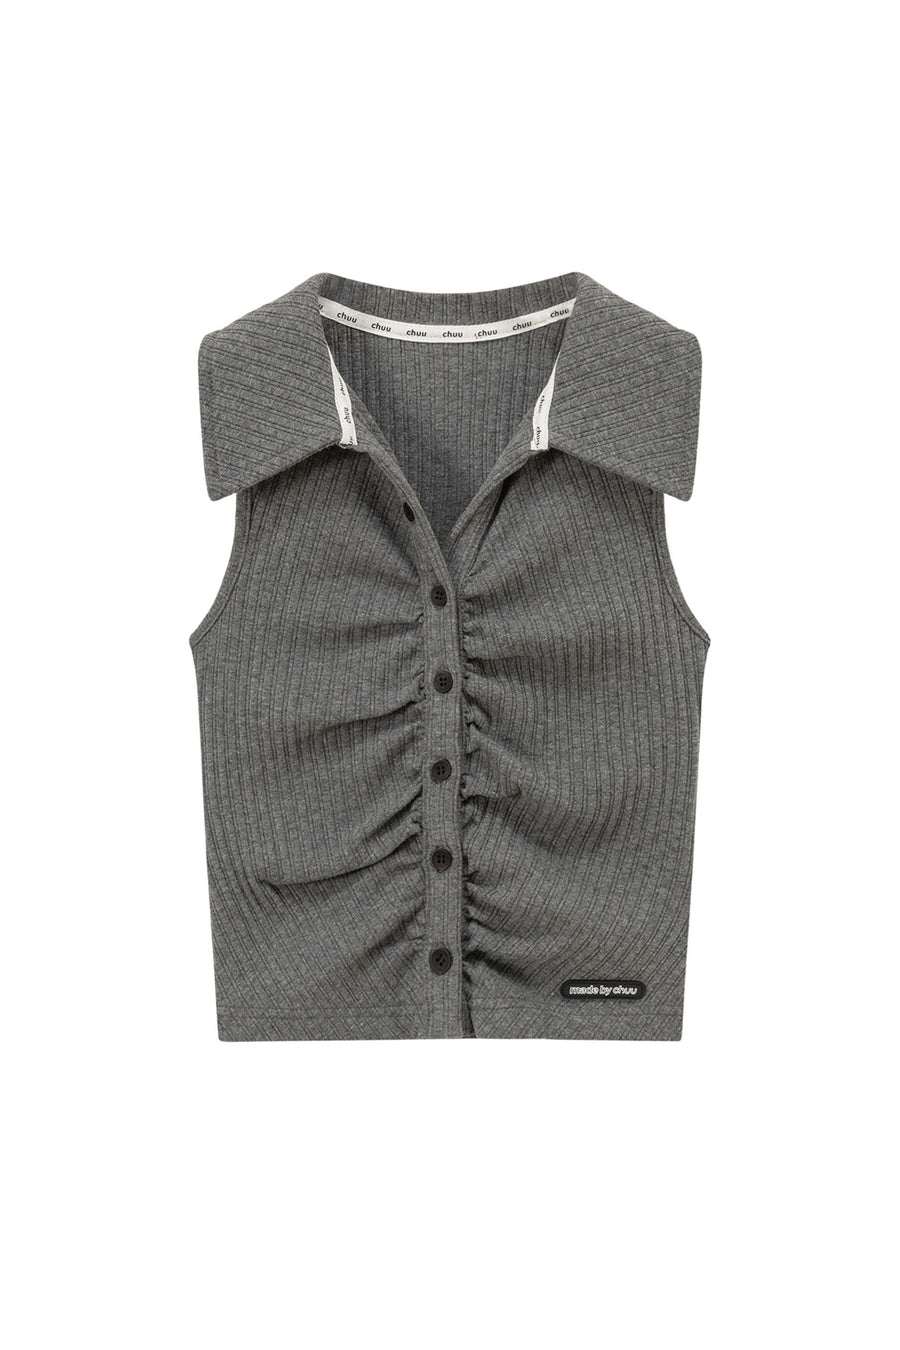 CHUU Shirred Button Color Sleeveless Crop Top